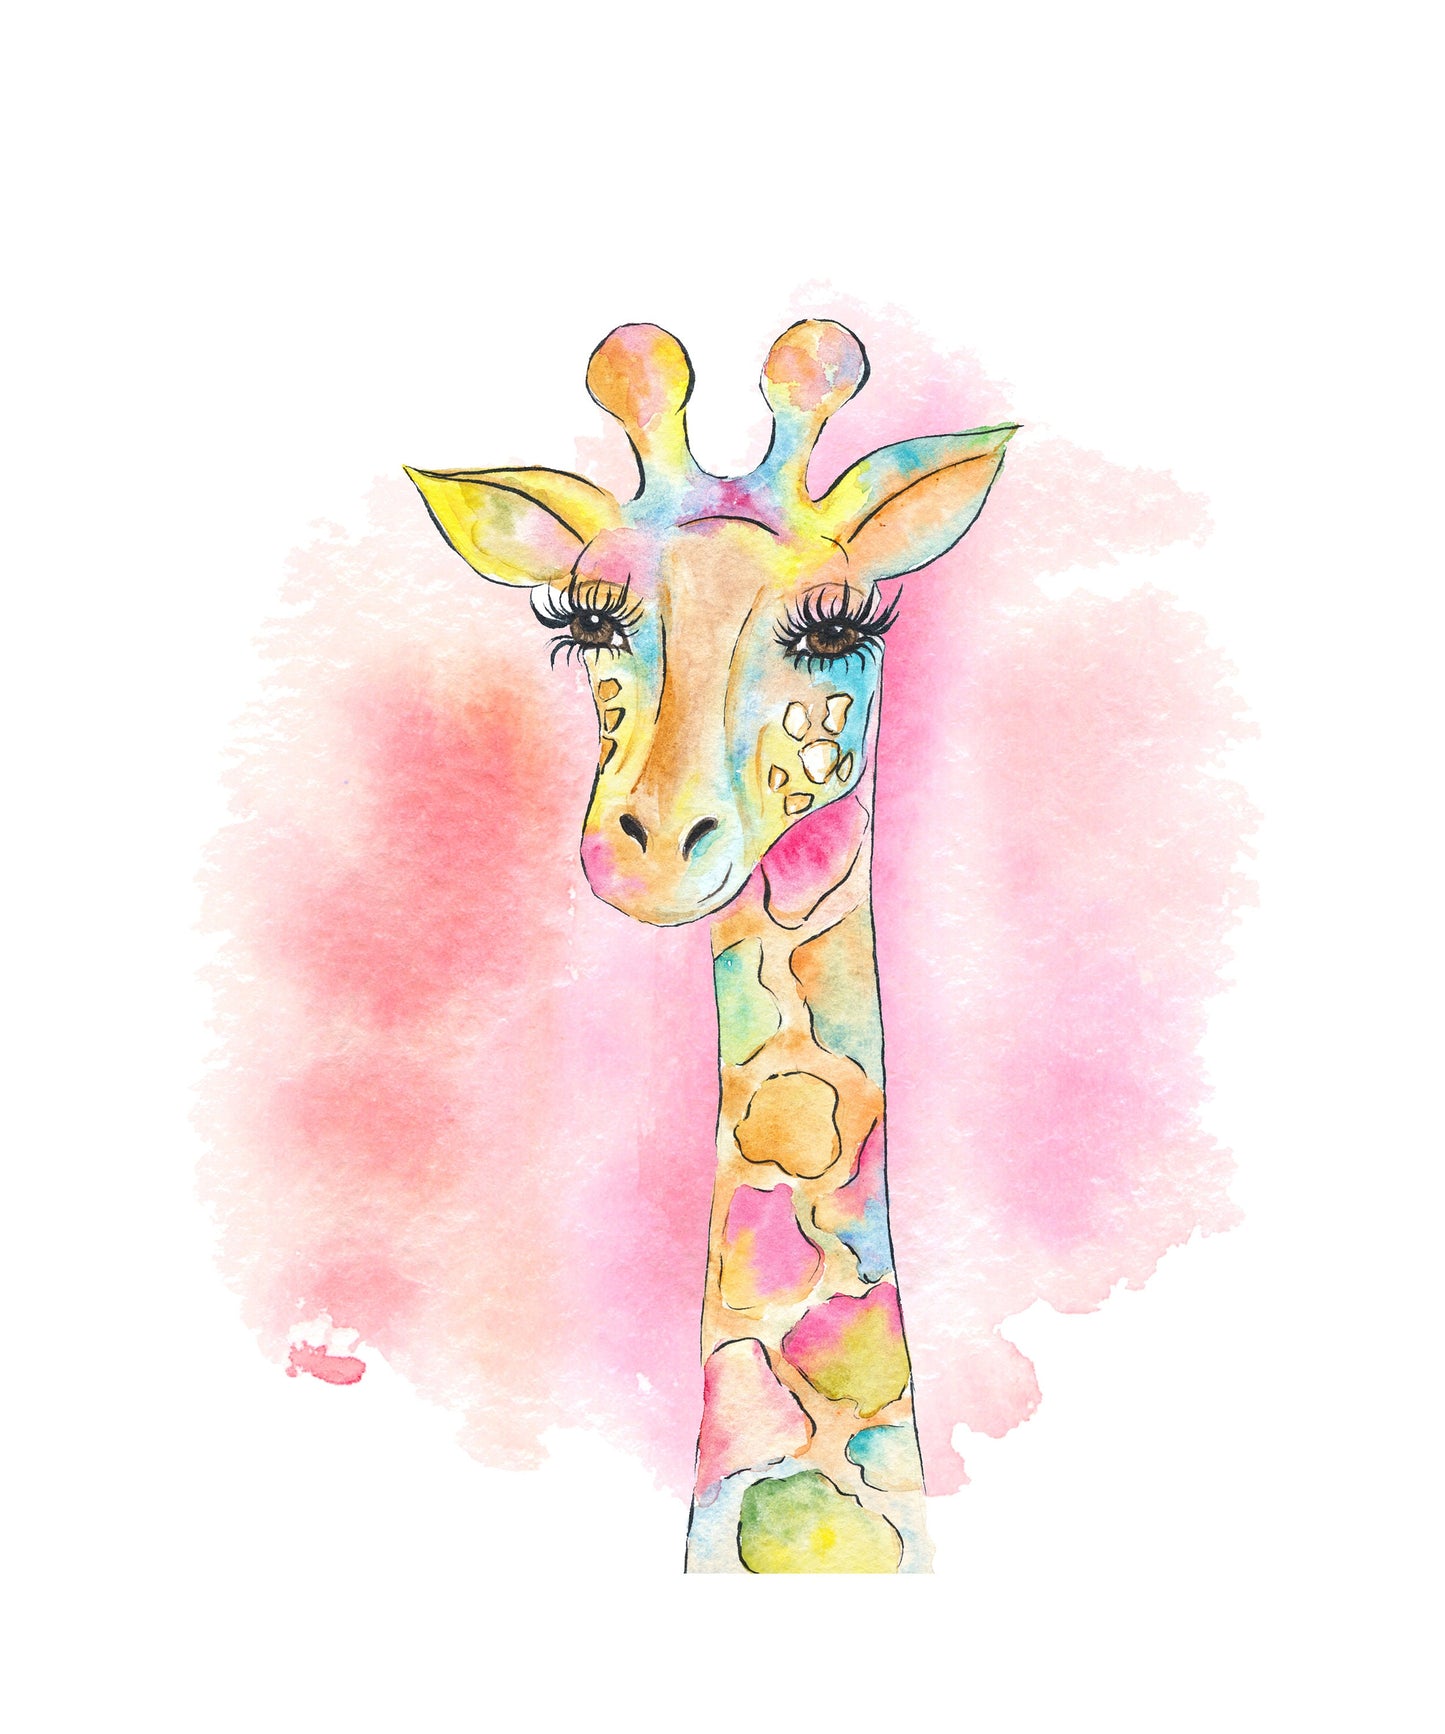 16x20 Watercolor Giraffe Wall Art Canvas Print